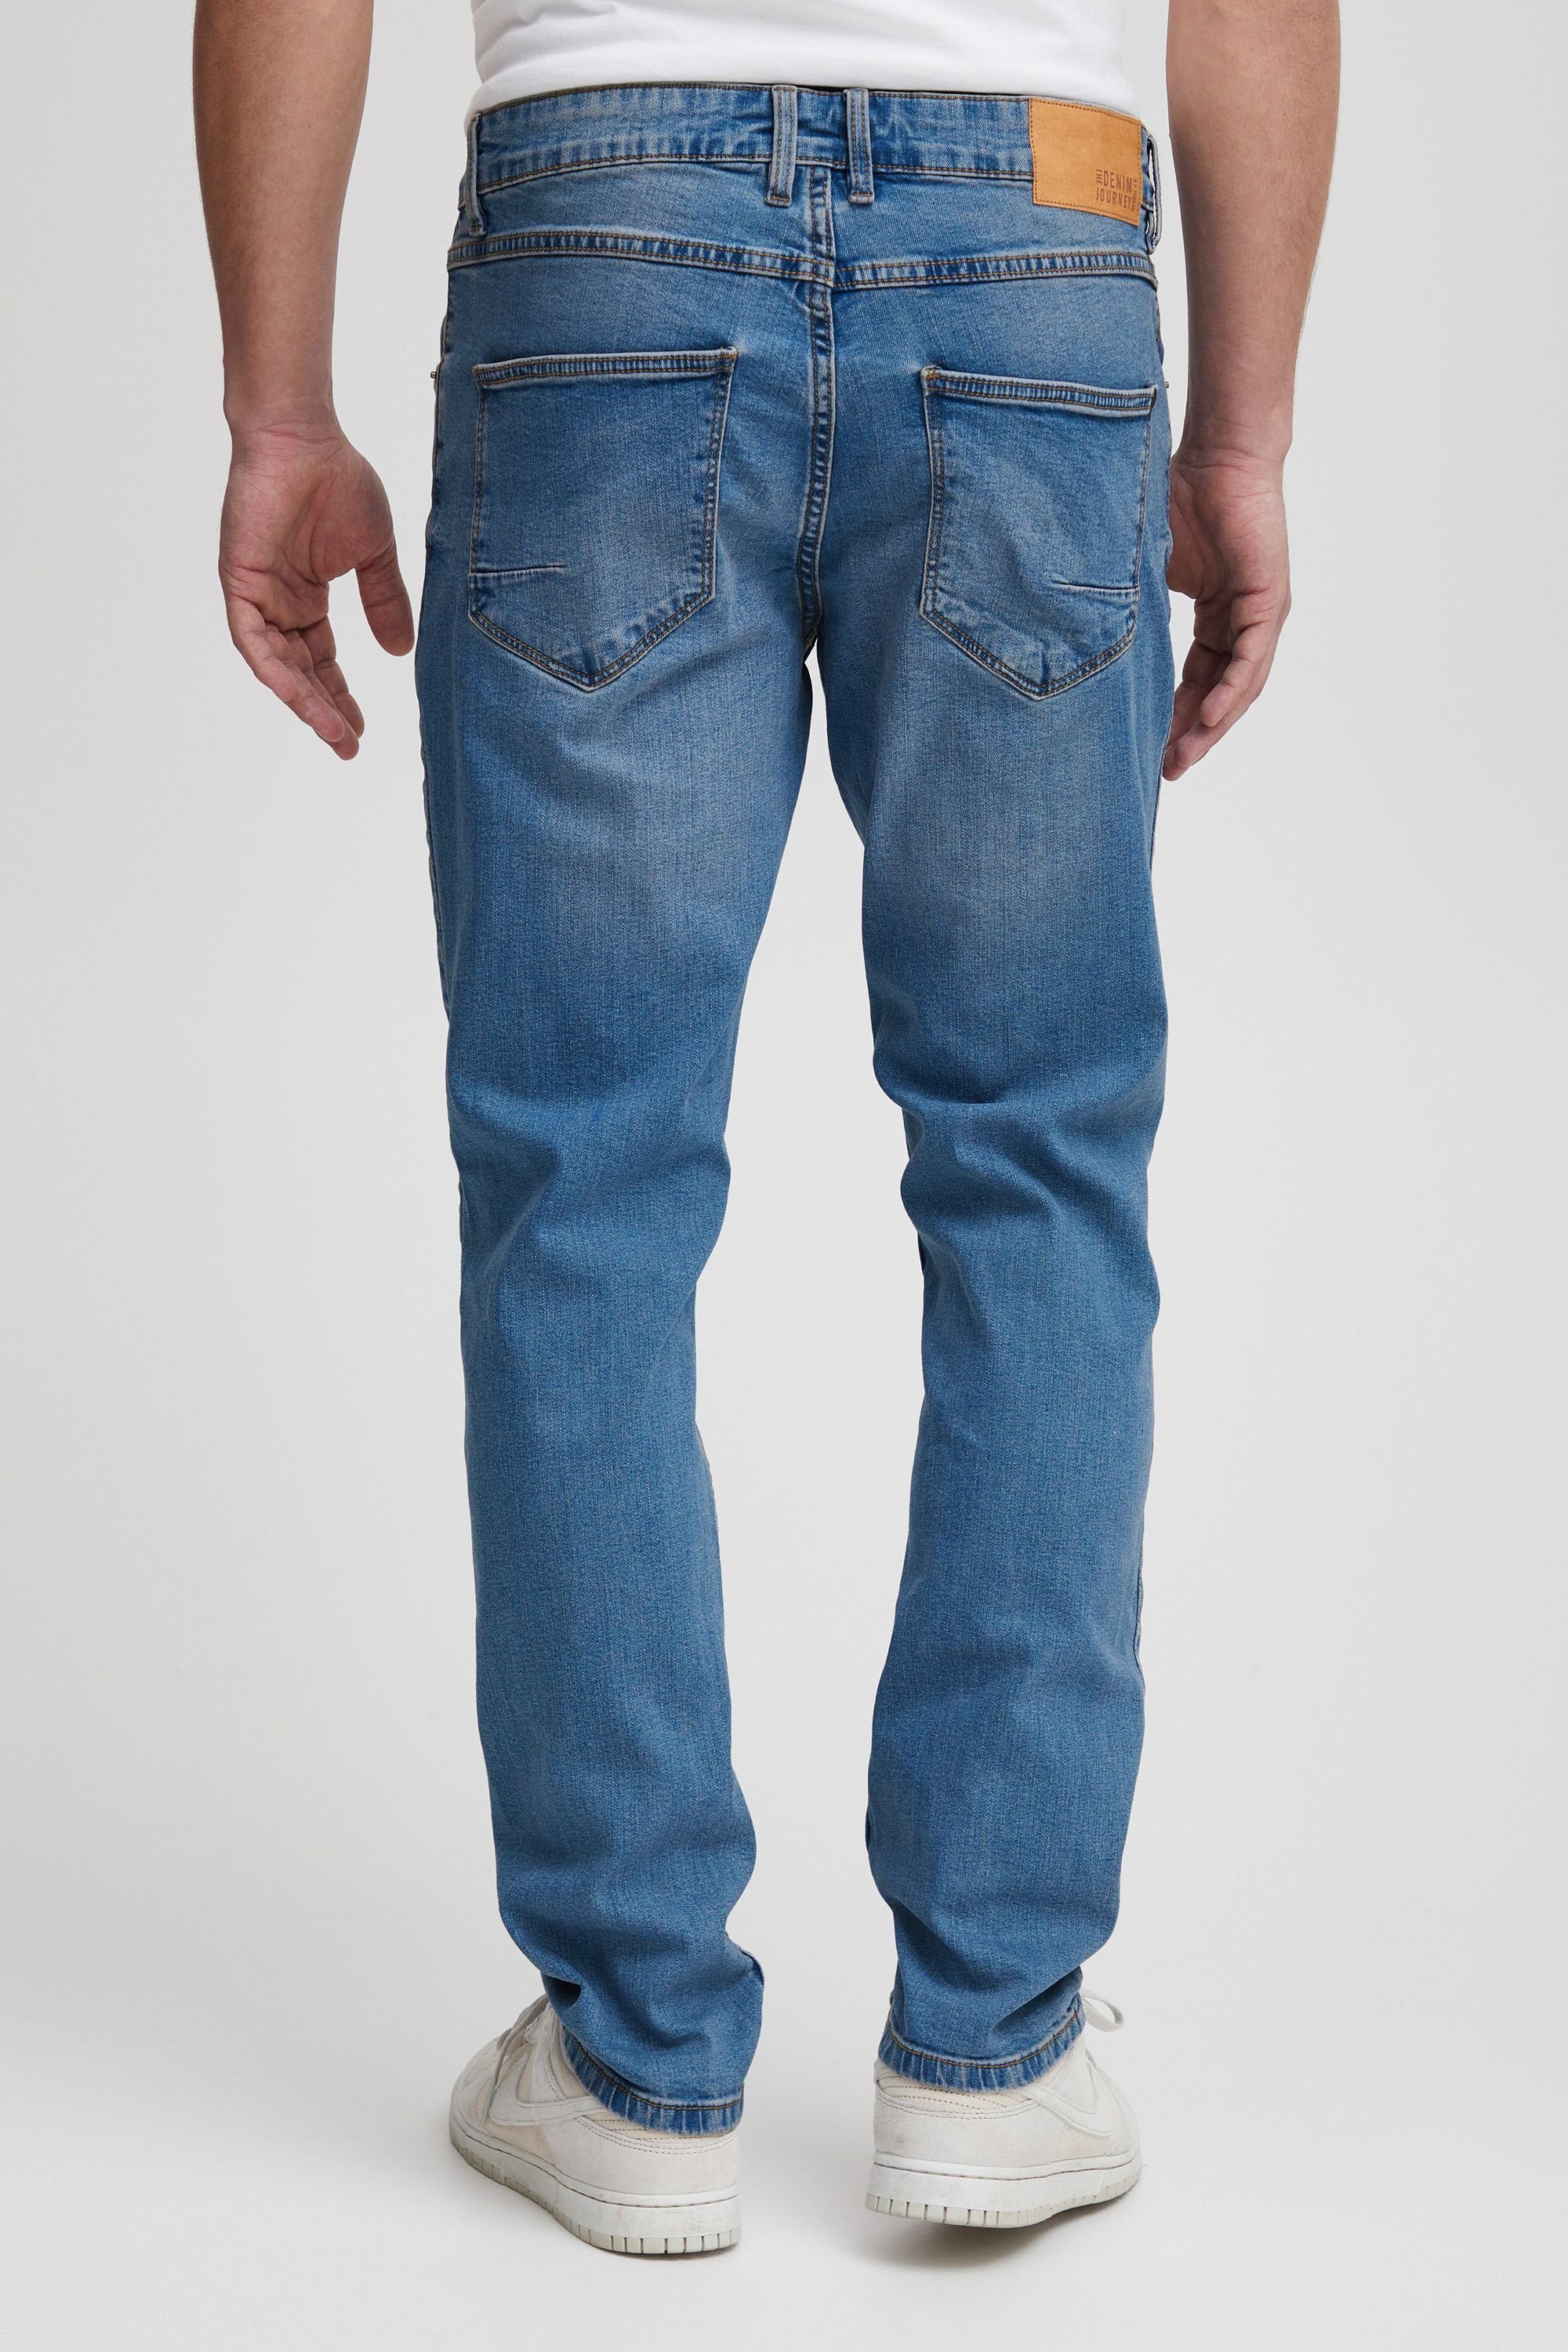 !Solid Blue 5-Pocket-Jeans 200 21104844 - SDJoy